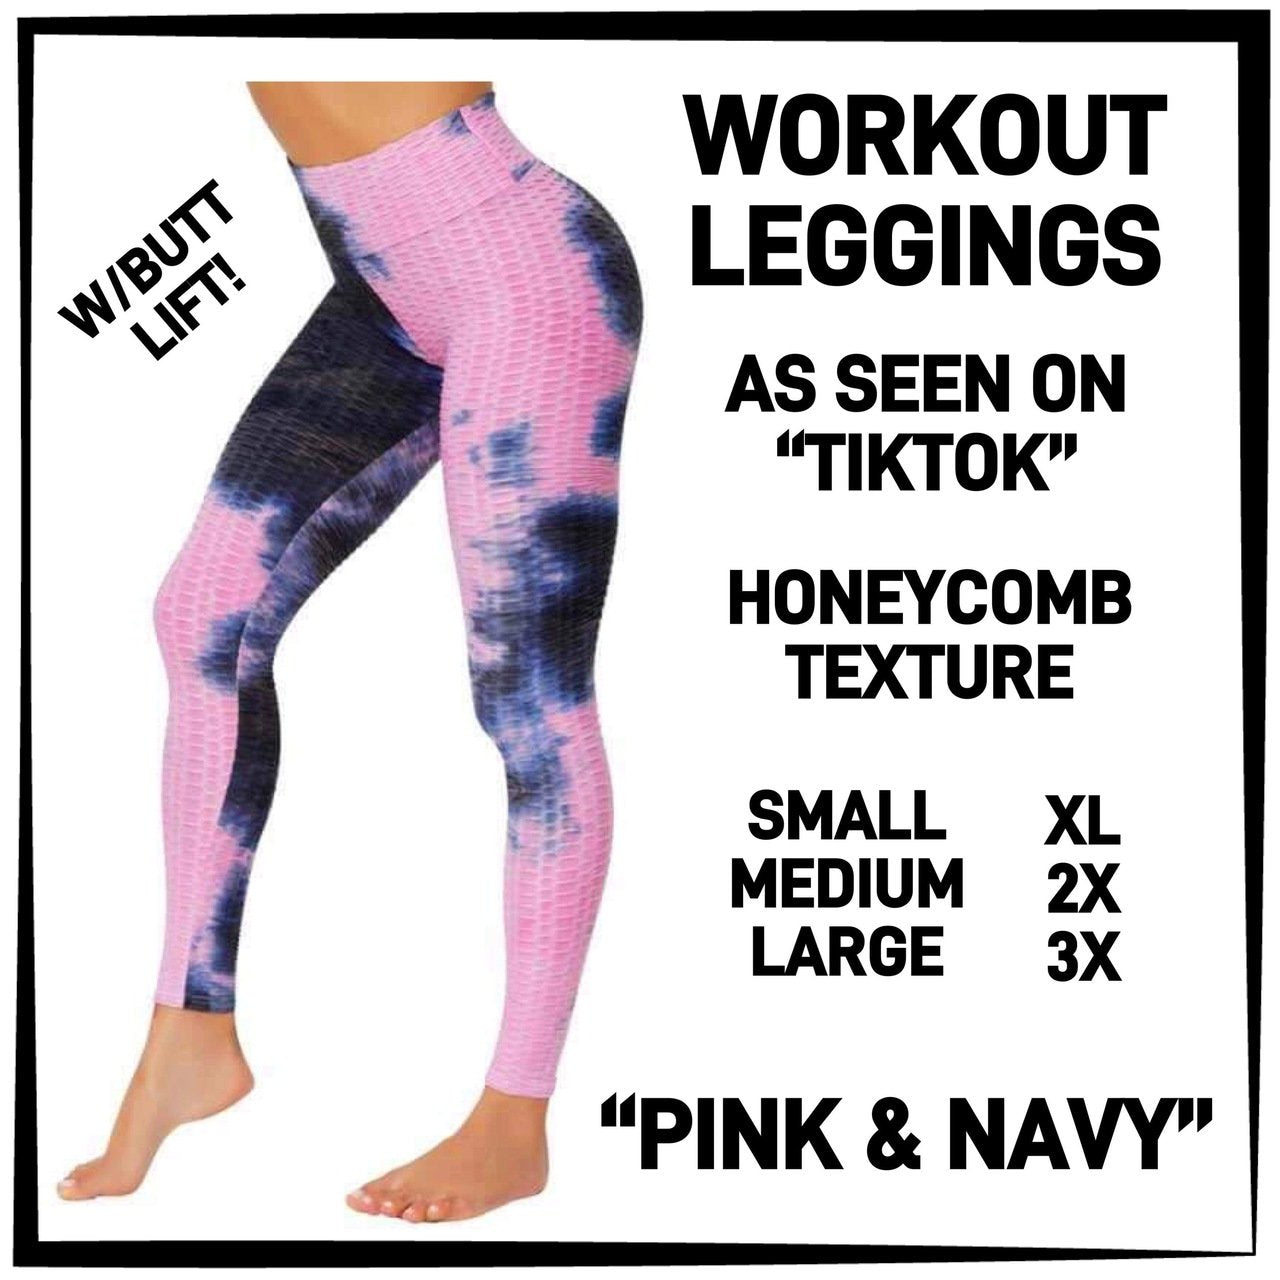 RTS - Pink & Navy Honeycomb Workout Leggings